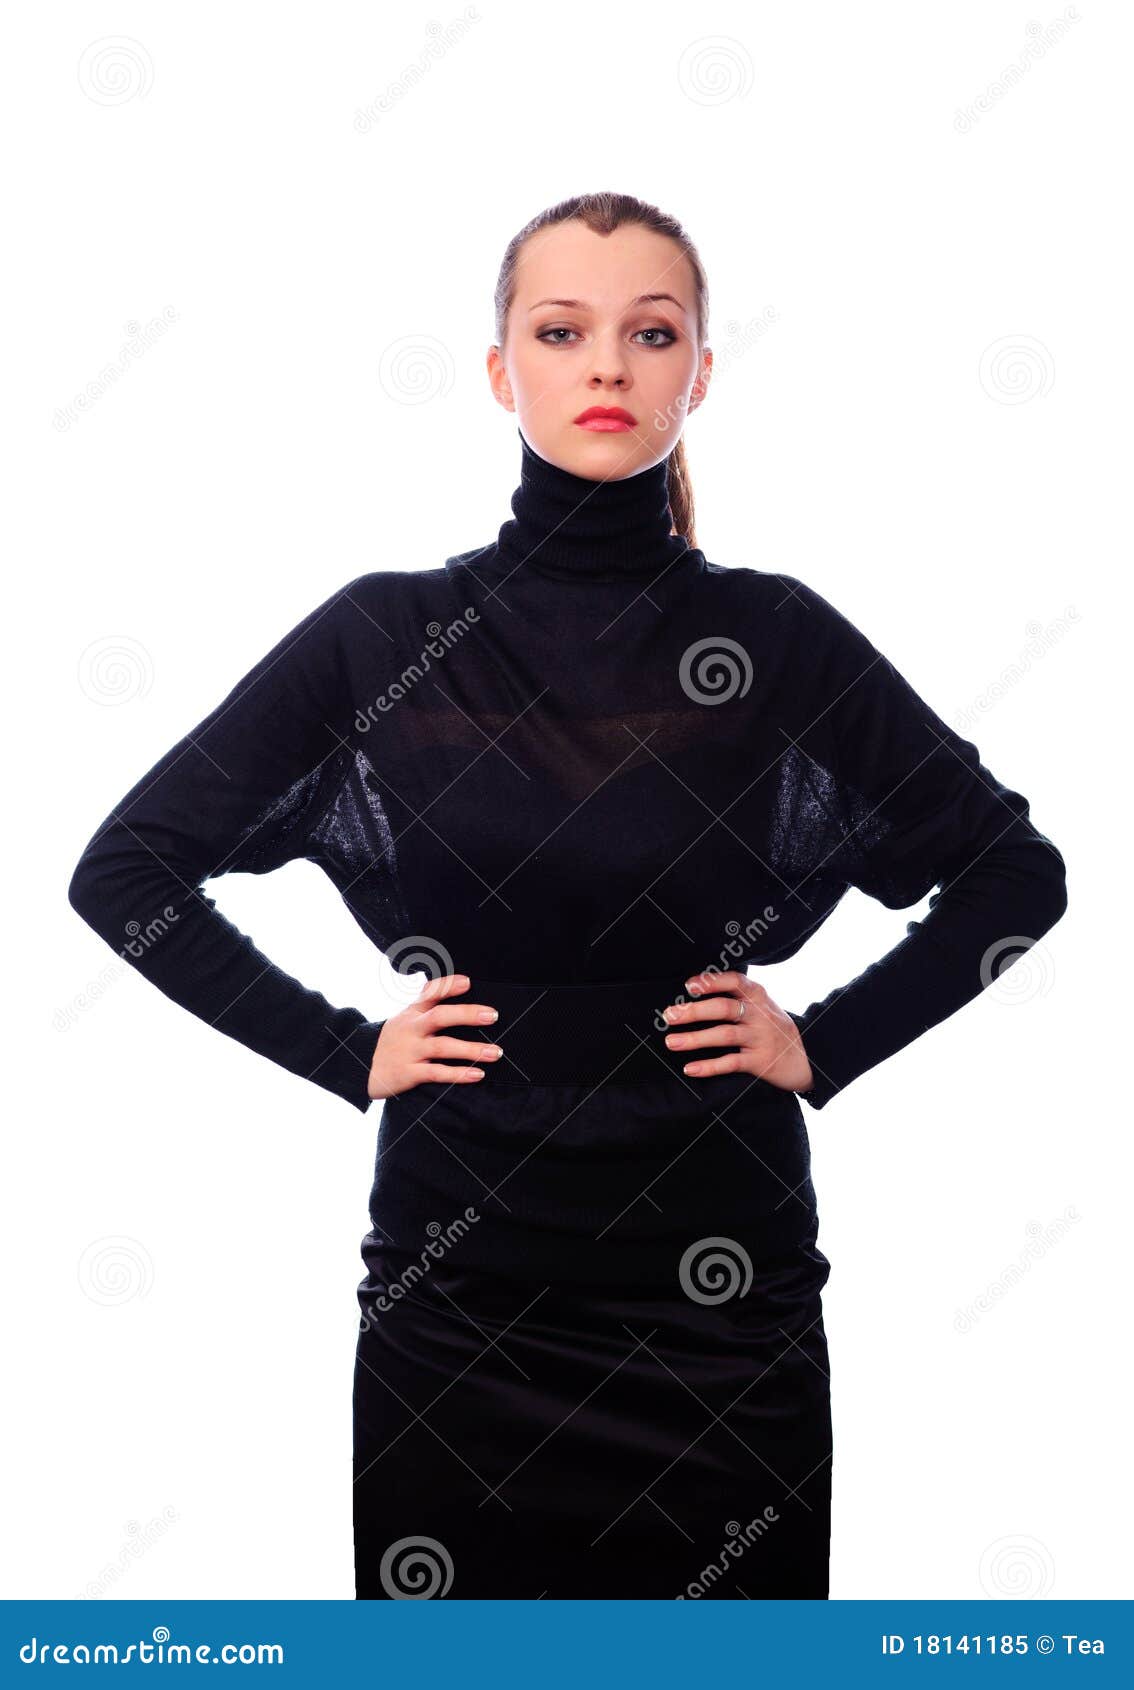 Woman In Black Turtleneck Sweater Royalty Free Stock Photo - Image ...